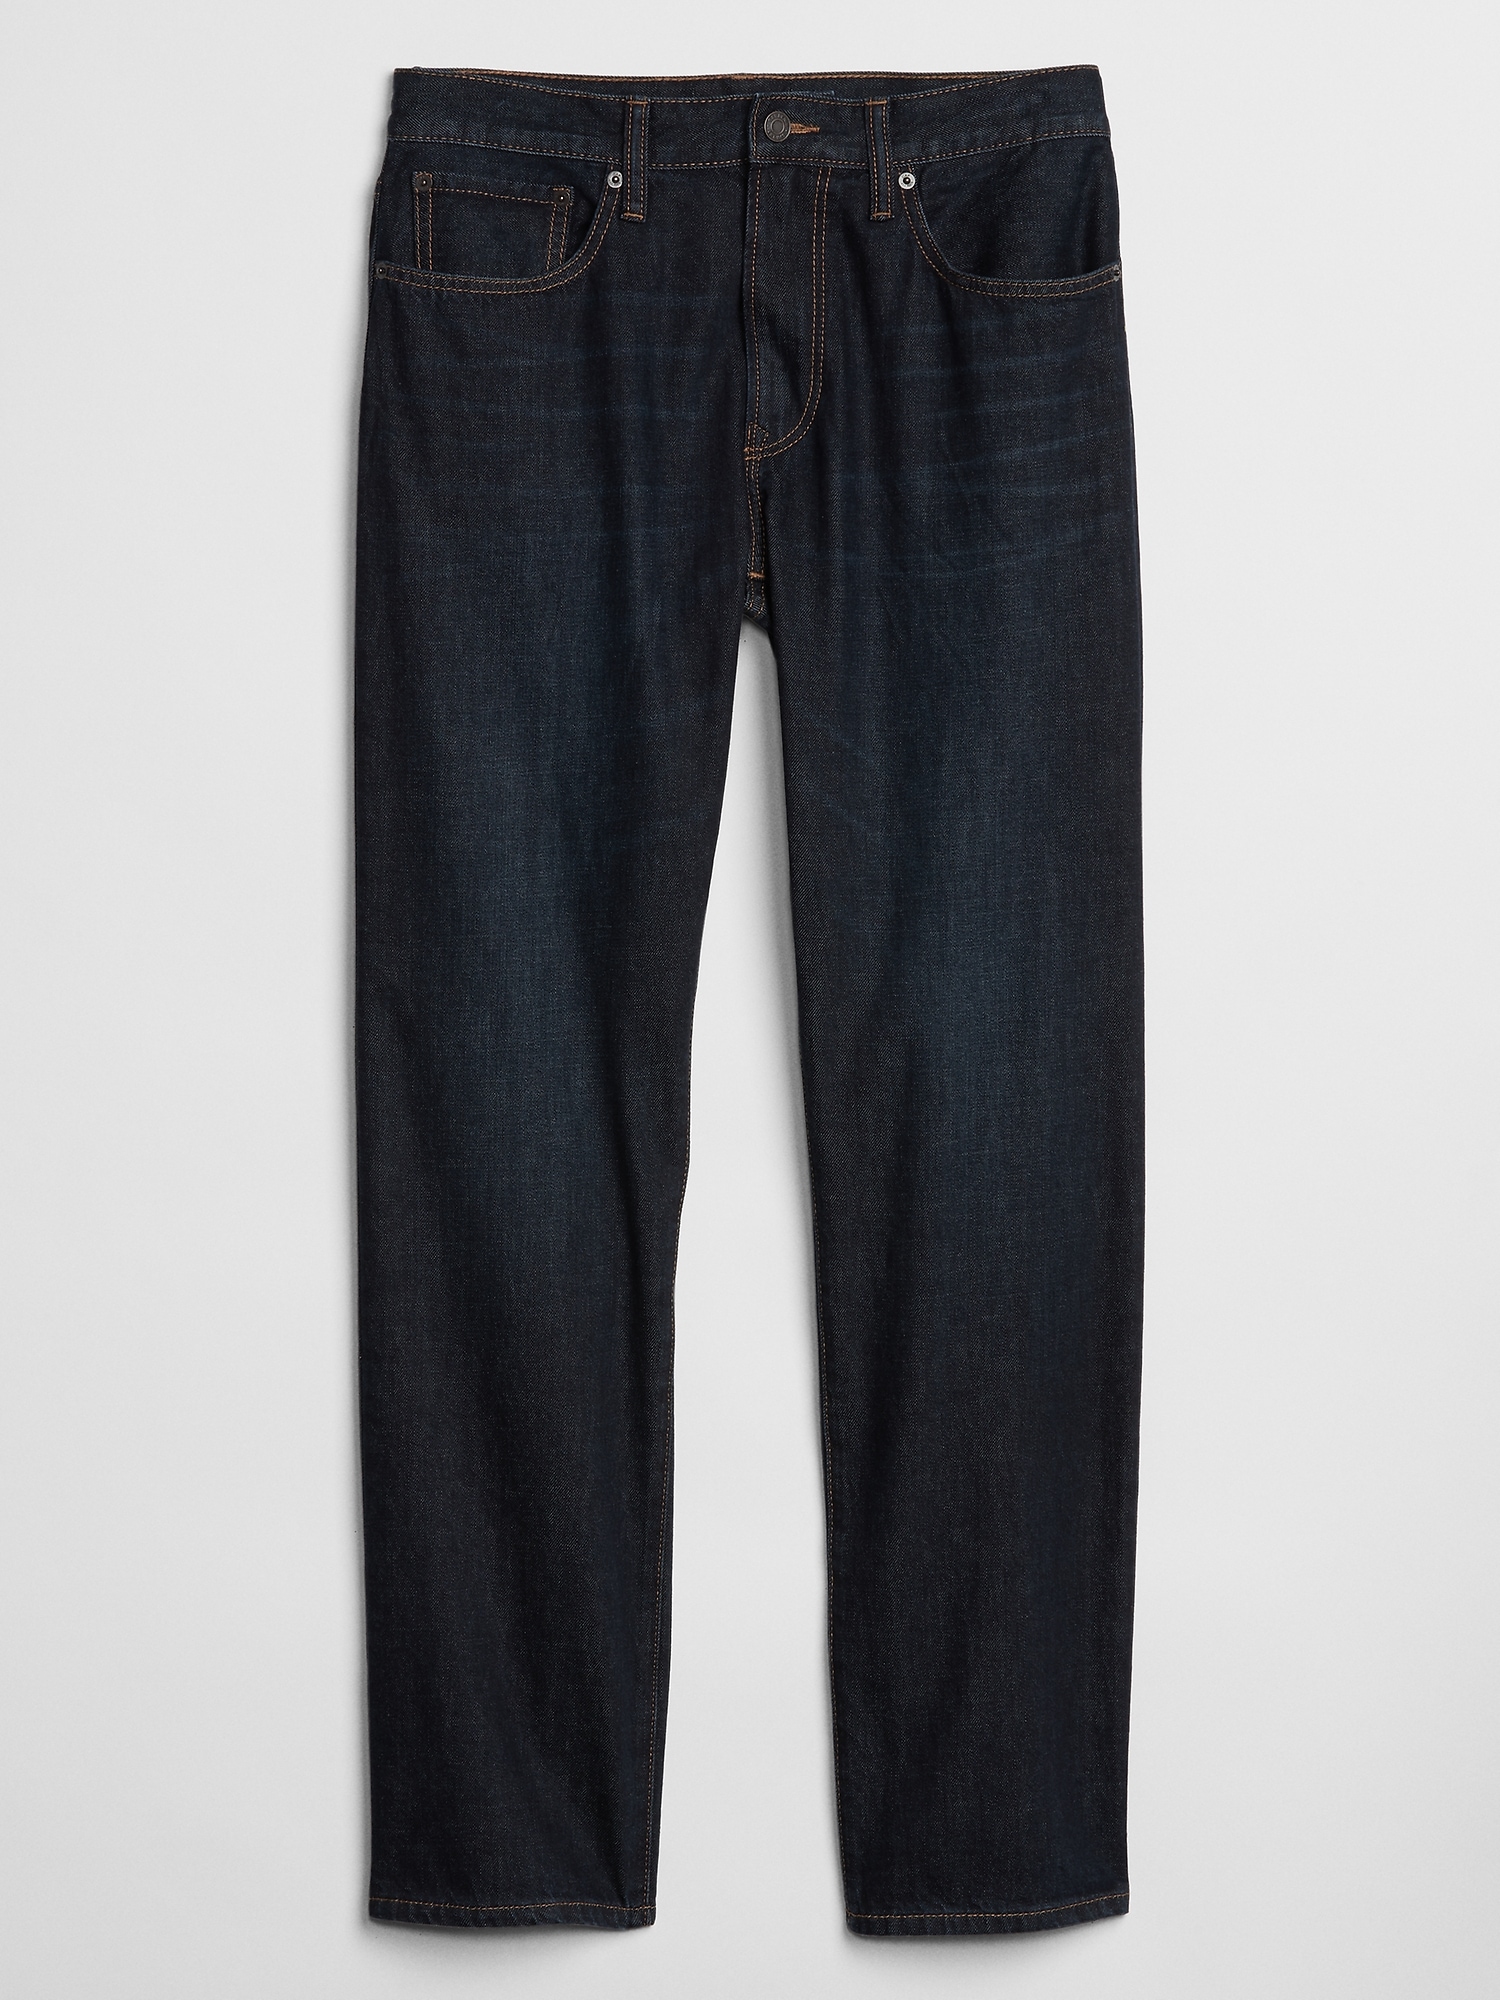 Gap washwell jeans